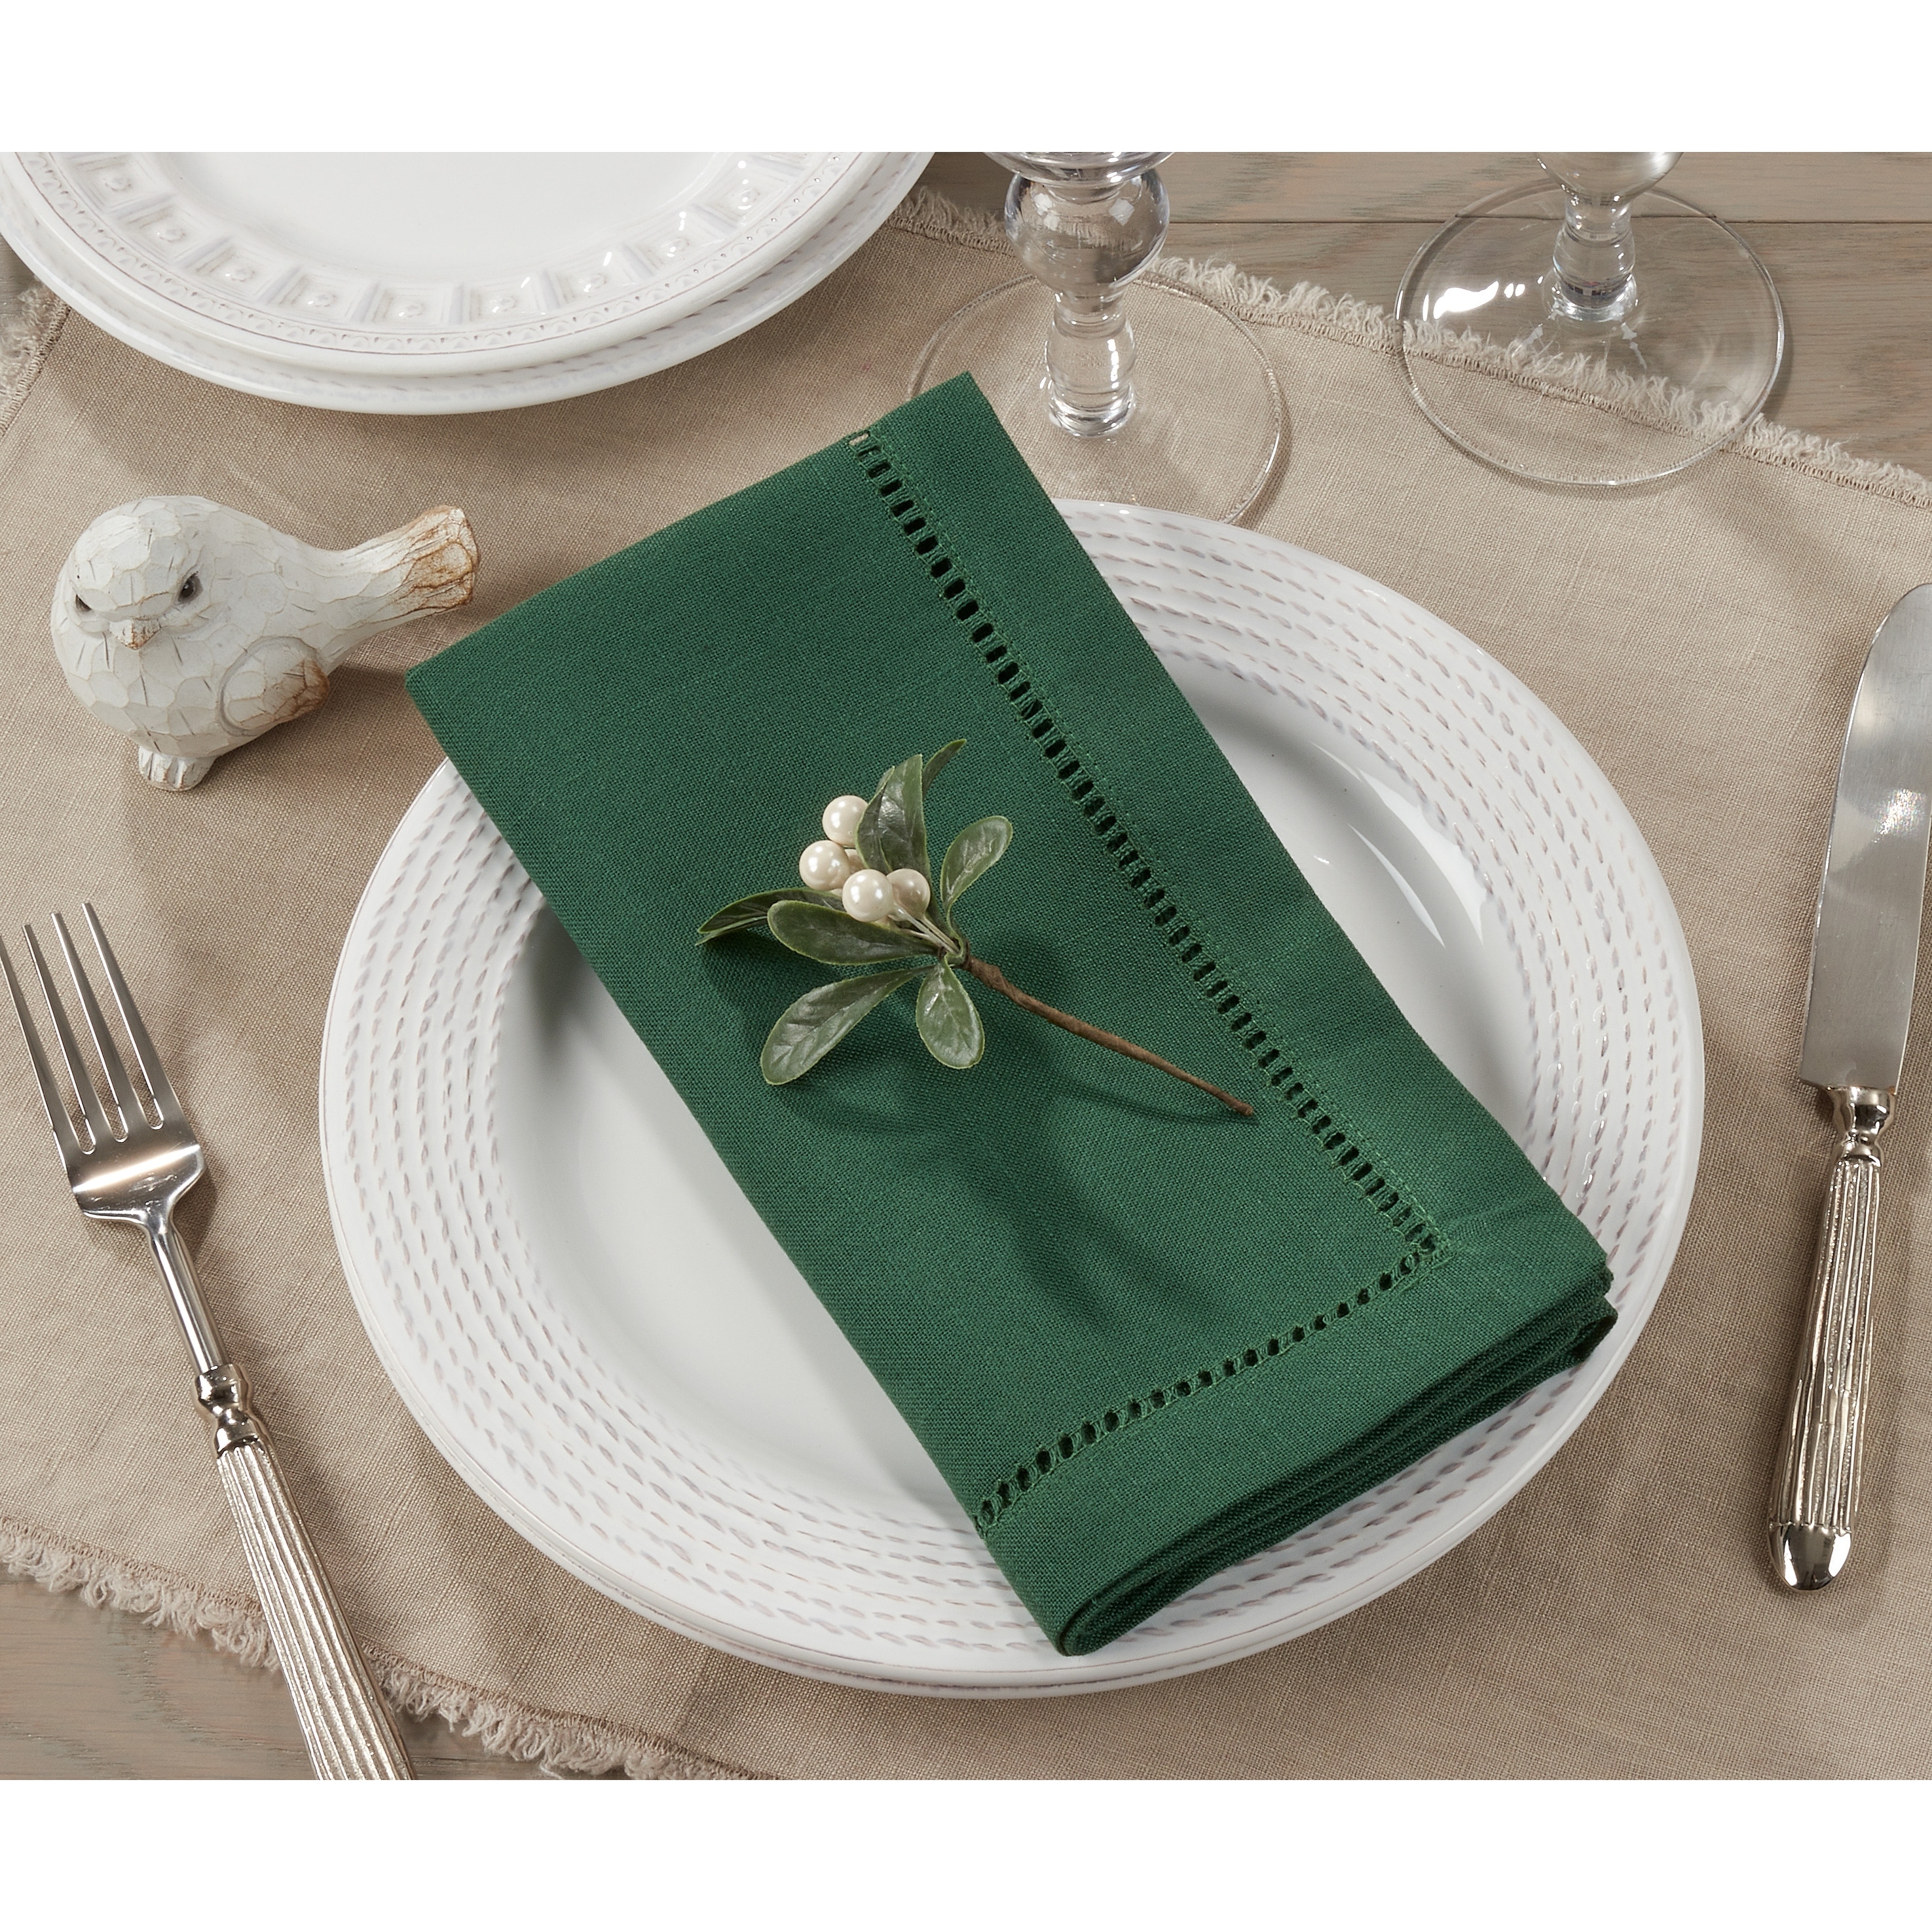 12 Linen Dinner Napkins with Hemstitched Edges 22 inch White | Cloth Table Napkins | Linen Wedding Napkins | Everyday Napkins